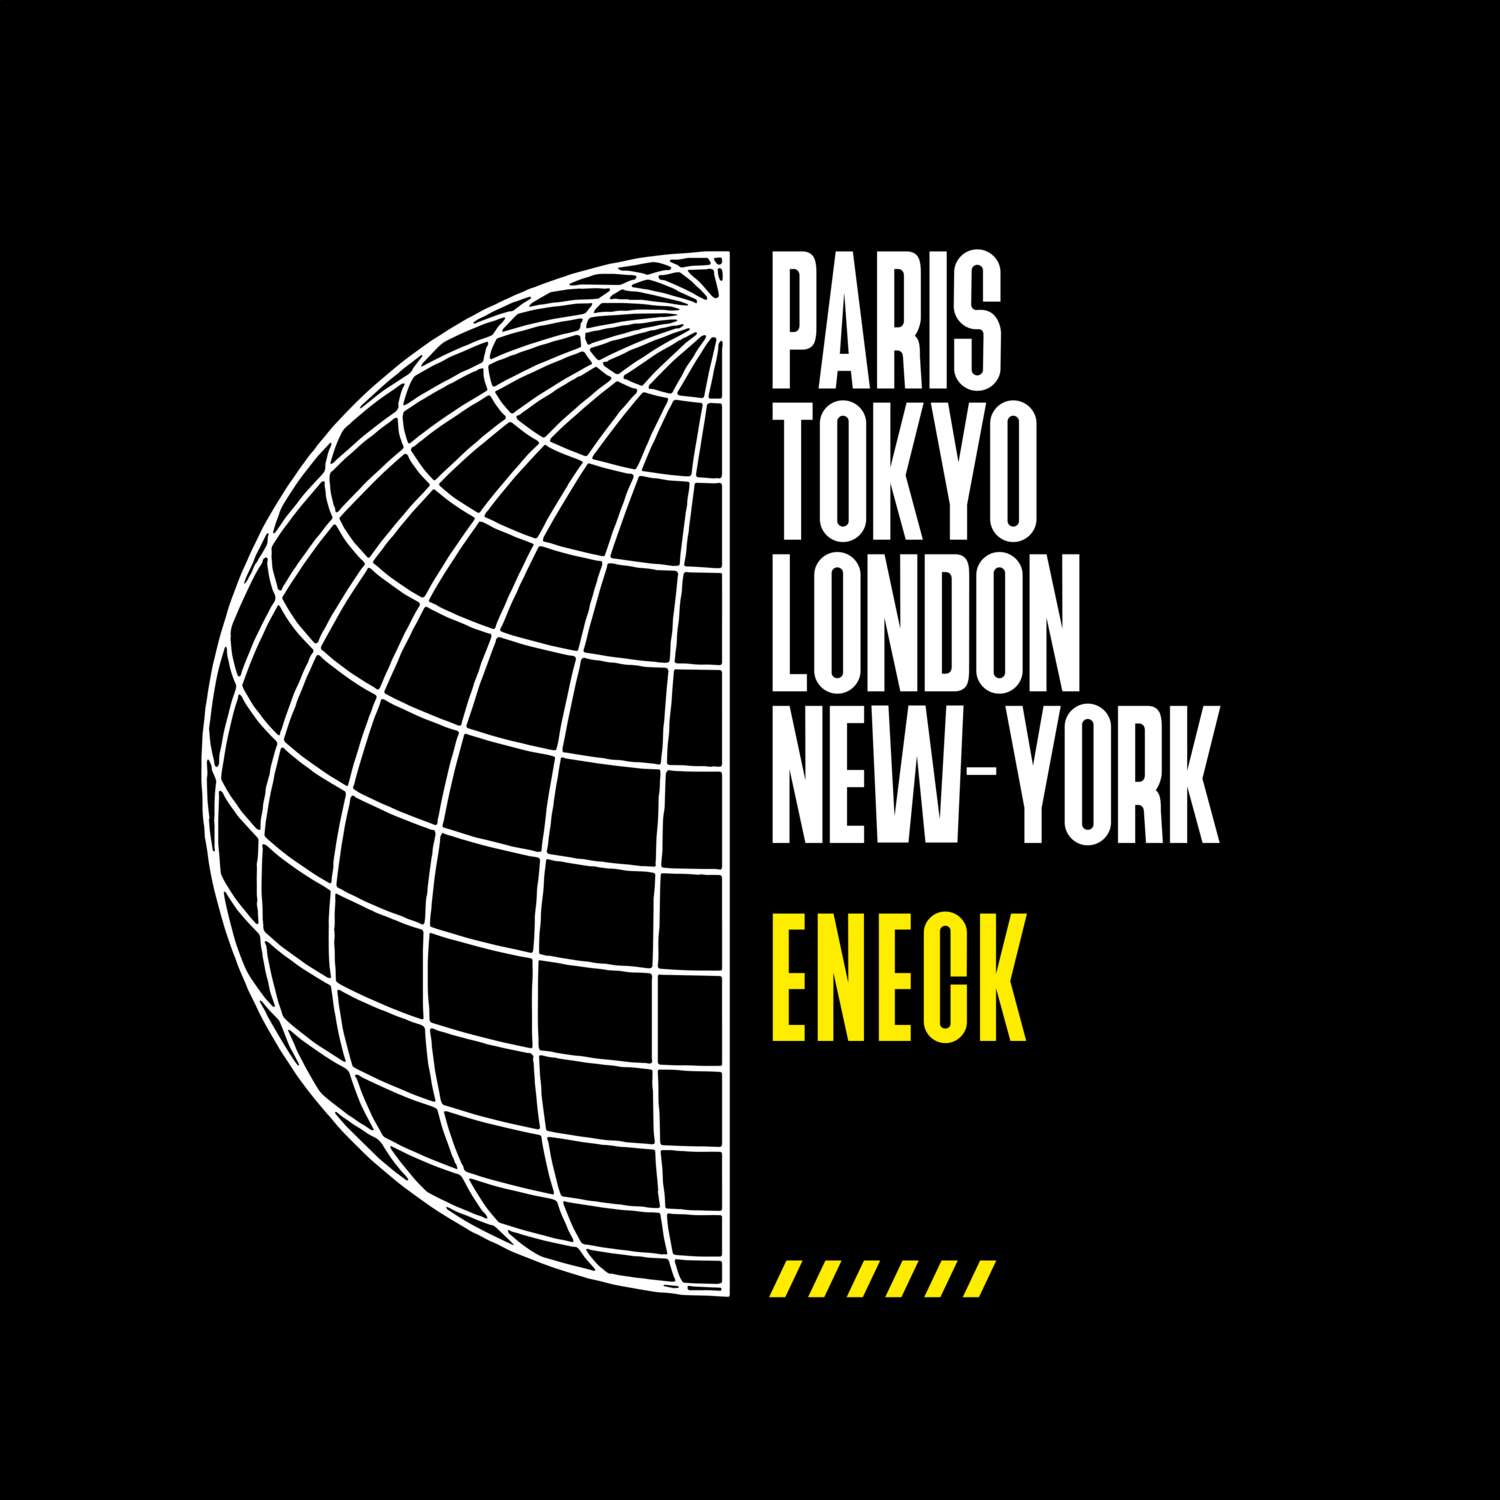 Eneck T-Shirt »Paris Tokyo London«